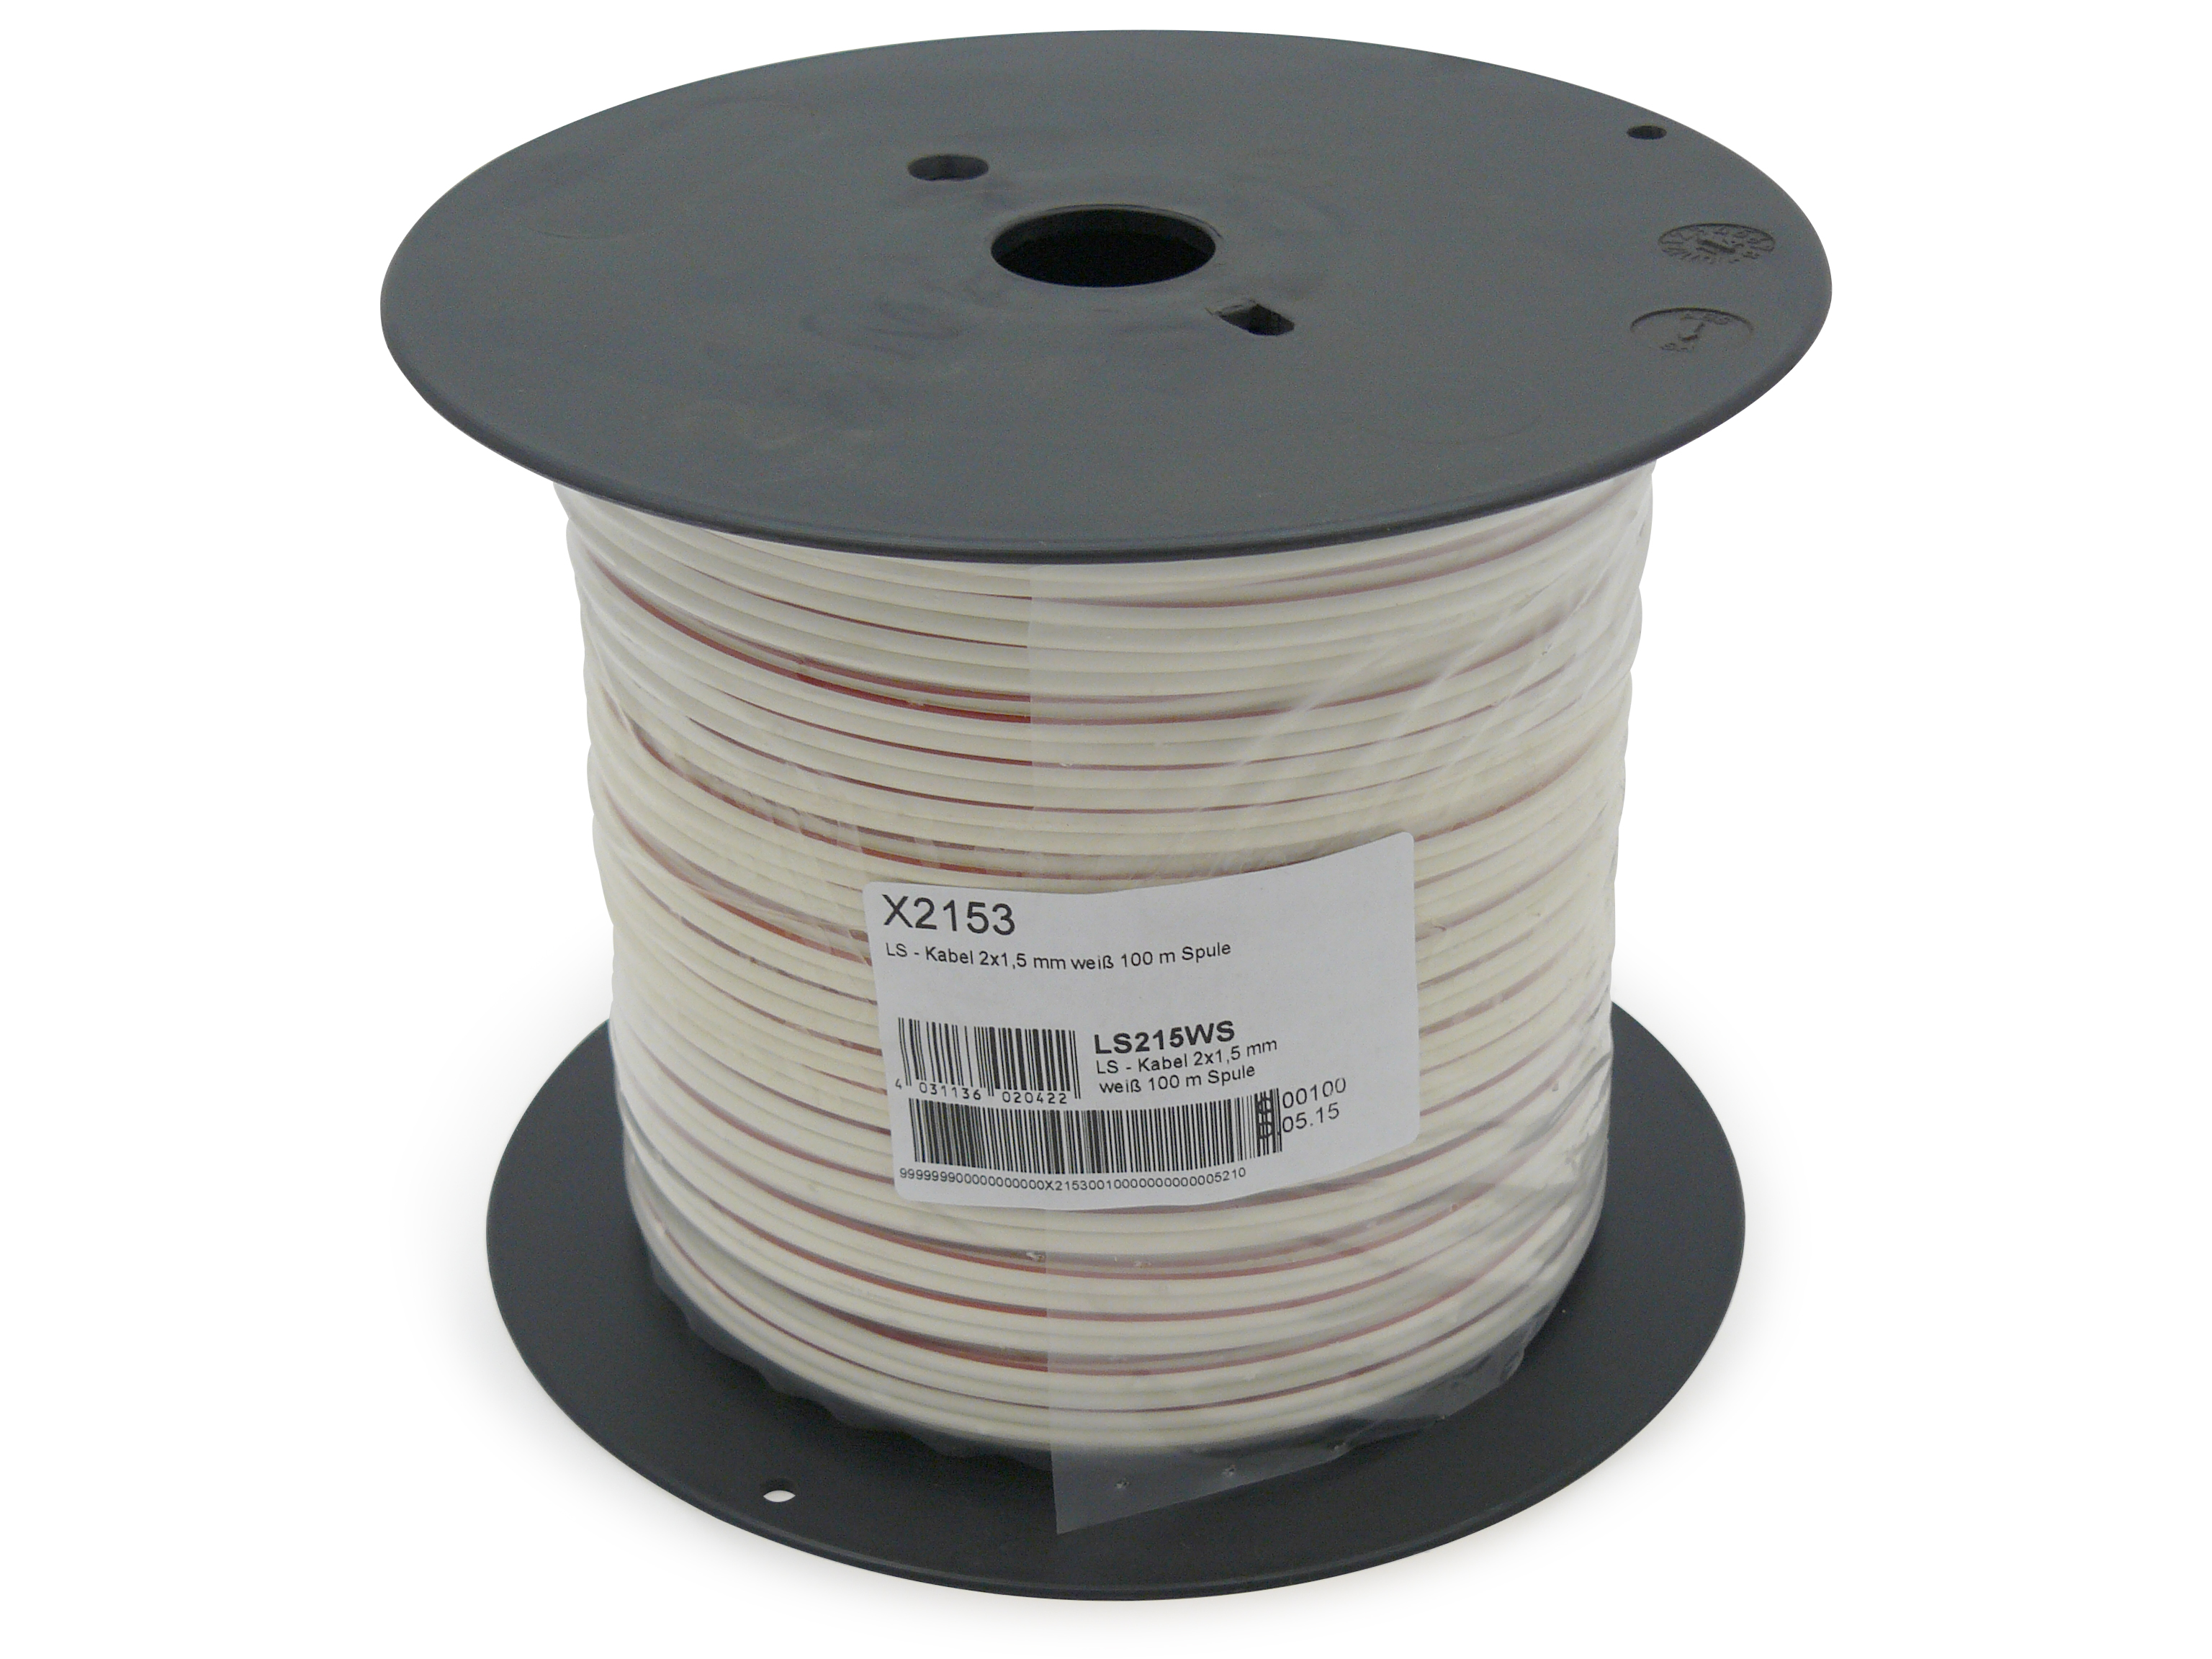 LS - Kabel 2x1,5 mm weiss 100 m Spule